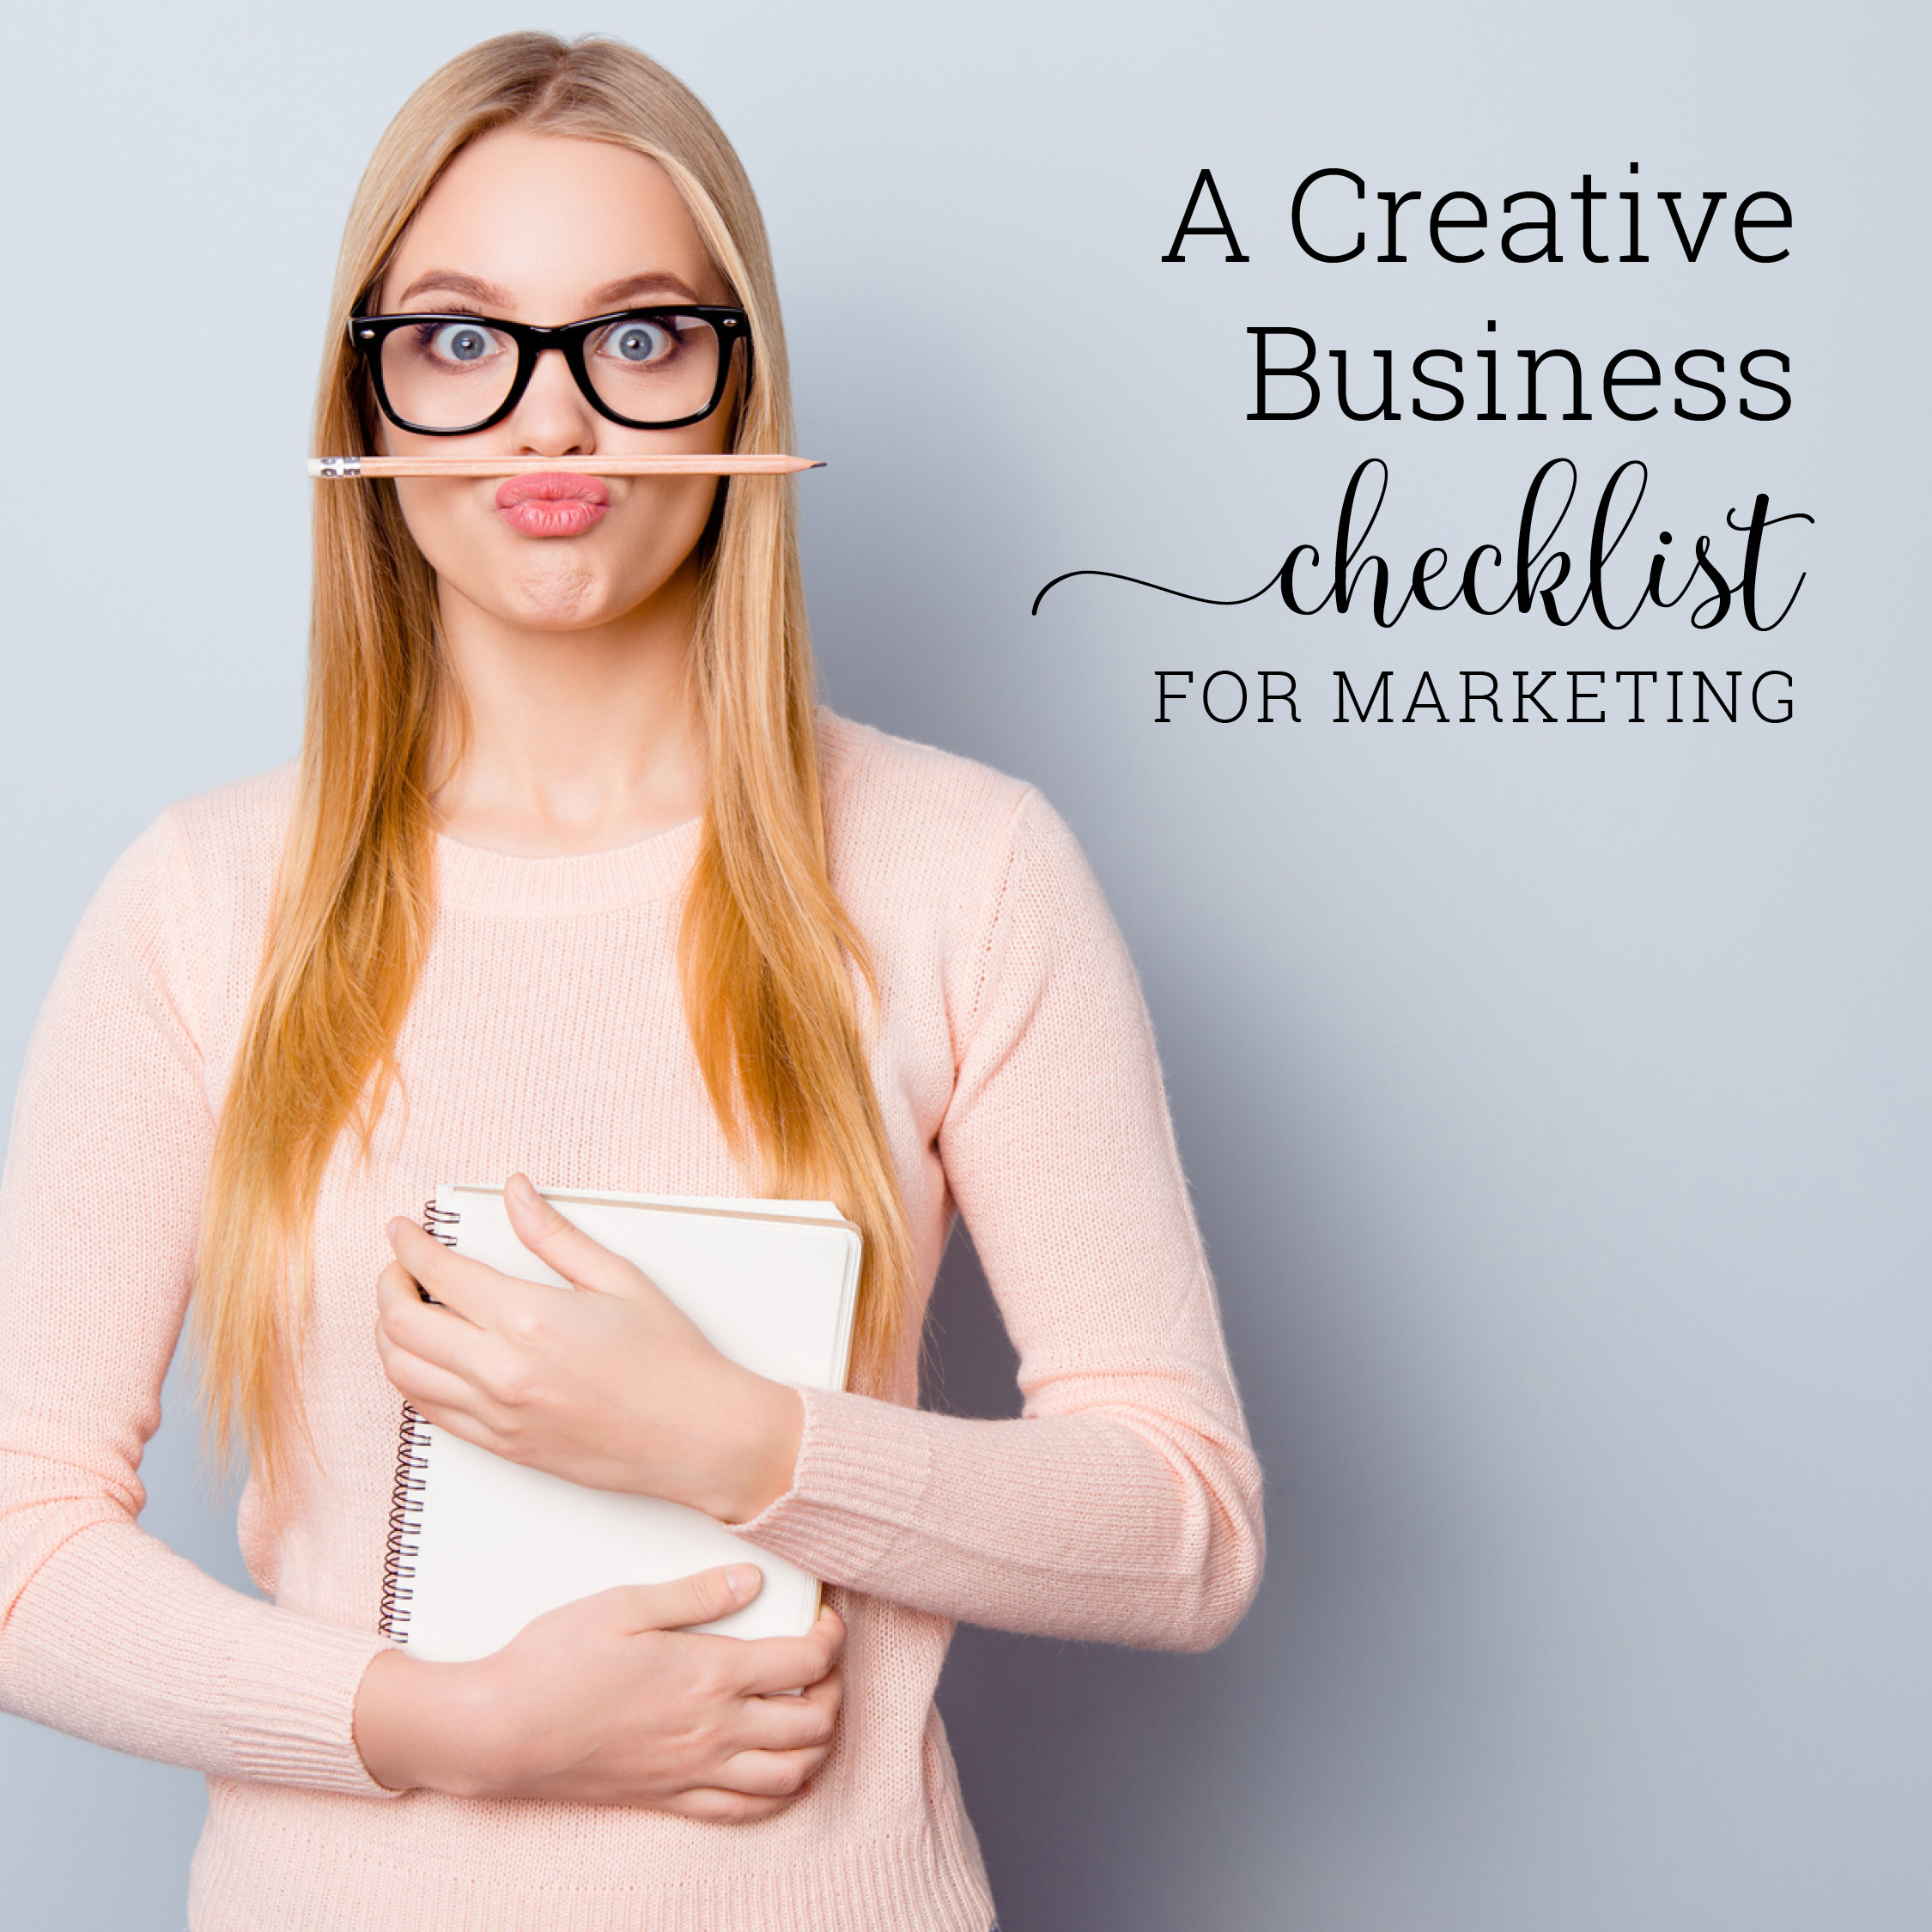 Organizing Your Creative Business’ Marketing Plan